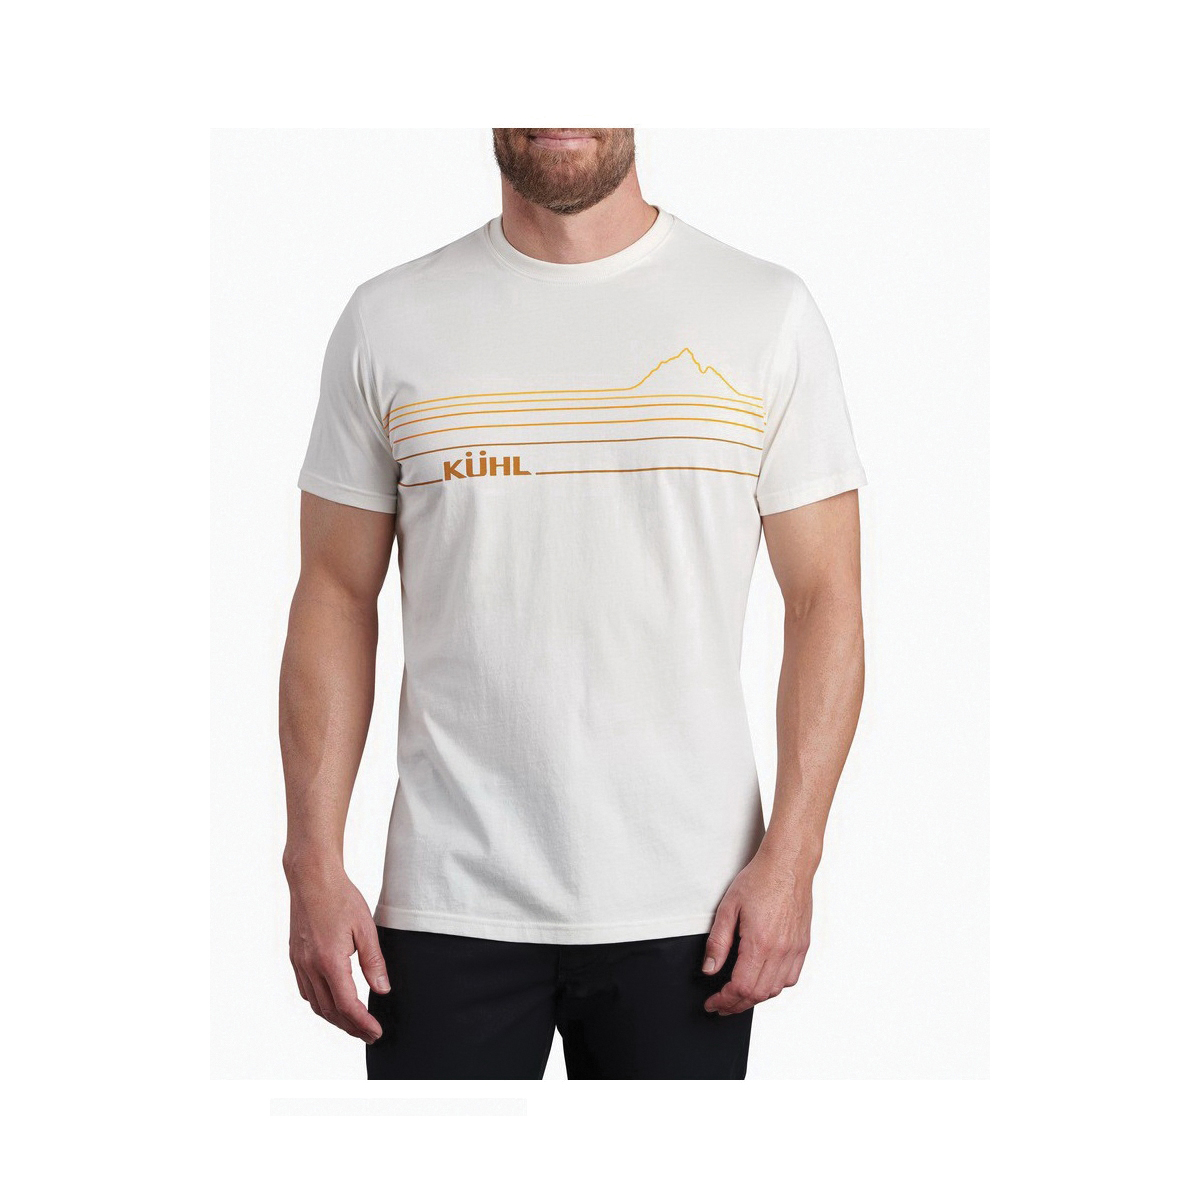 KUHL MOUNTAIN LINES Series 7397-WH-M T-Shirt, M, Cotton, White, KUHL Graphic Print/Pattern, Short Sleeve, Klassik Fit - 1